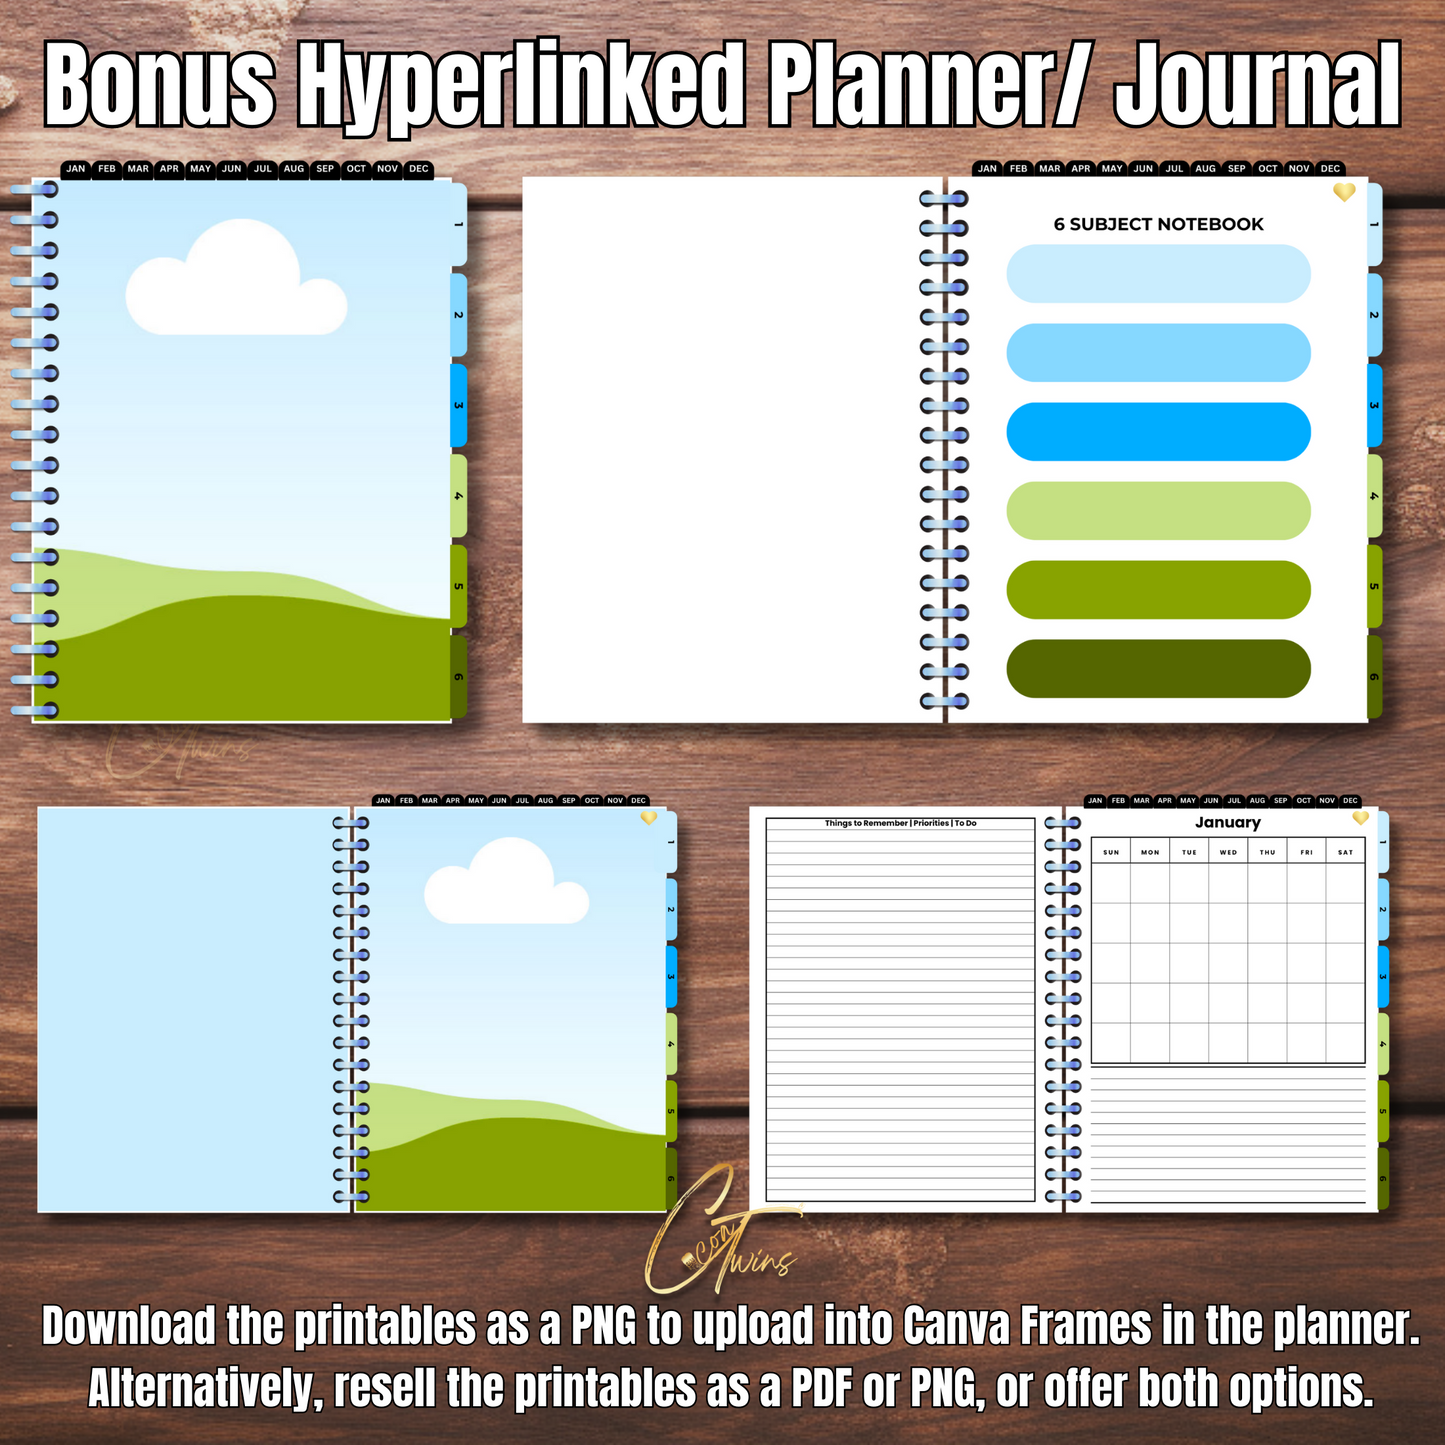 Cheerleaders | Editable Journal PLR Kit with a Bonus Hyperlinked Planner | Fully Editable Canva Templates